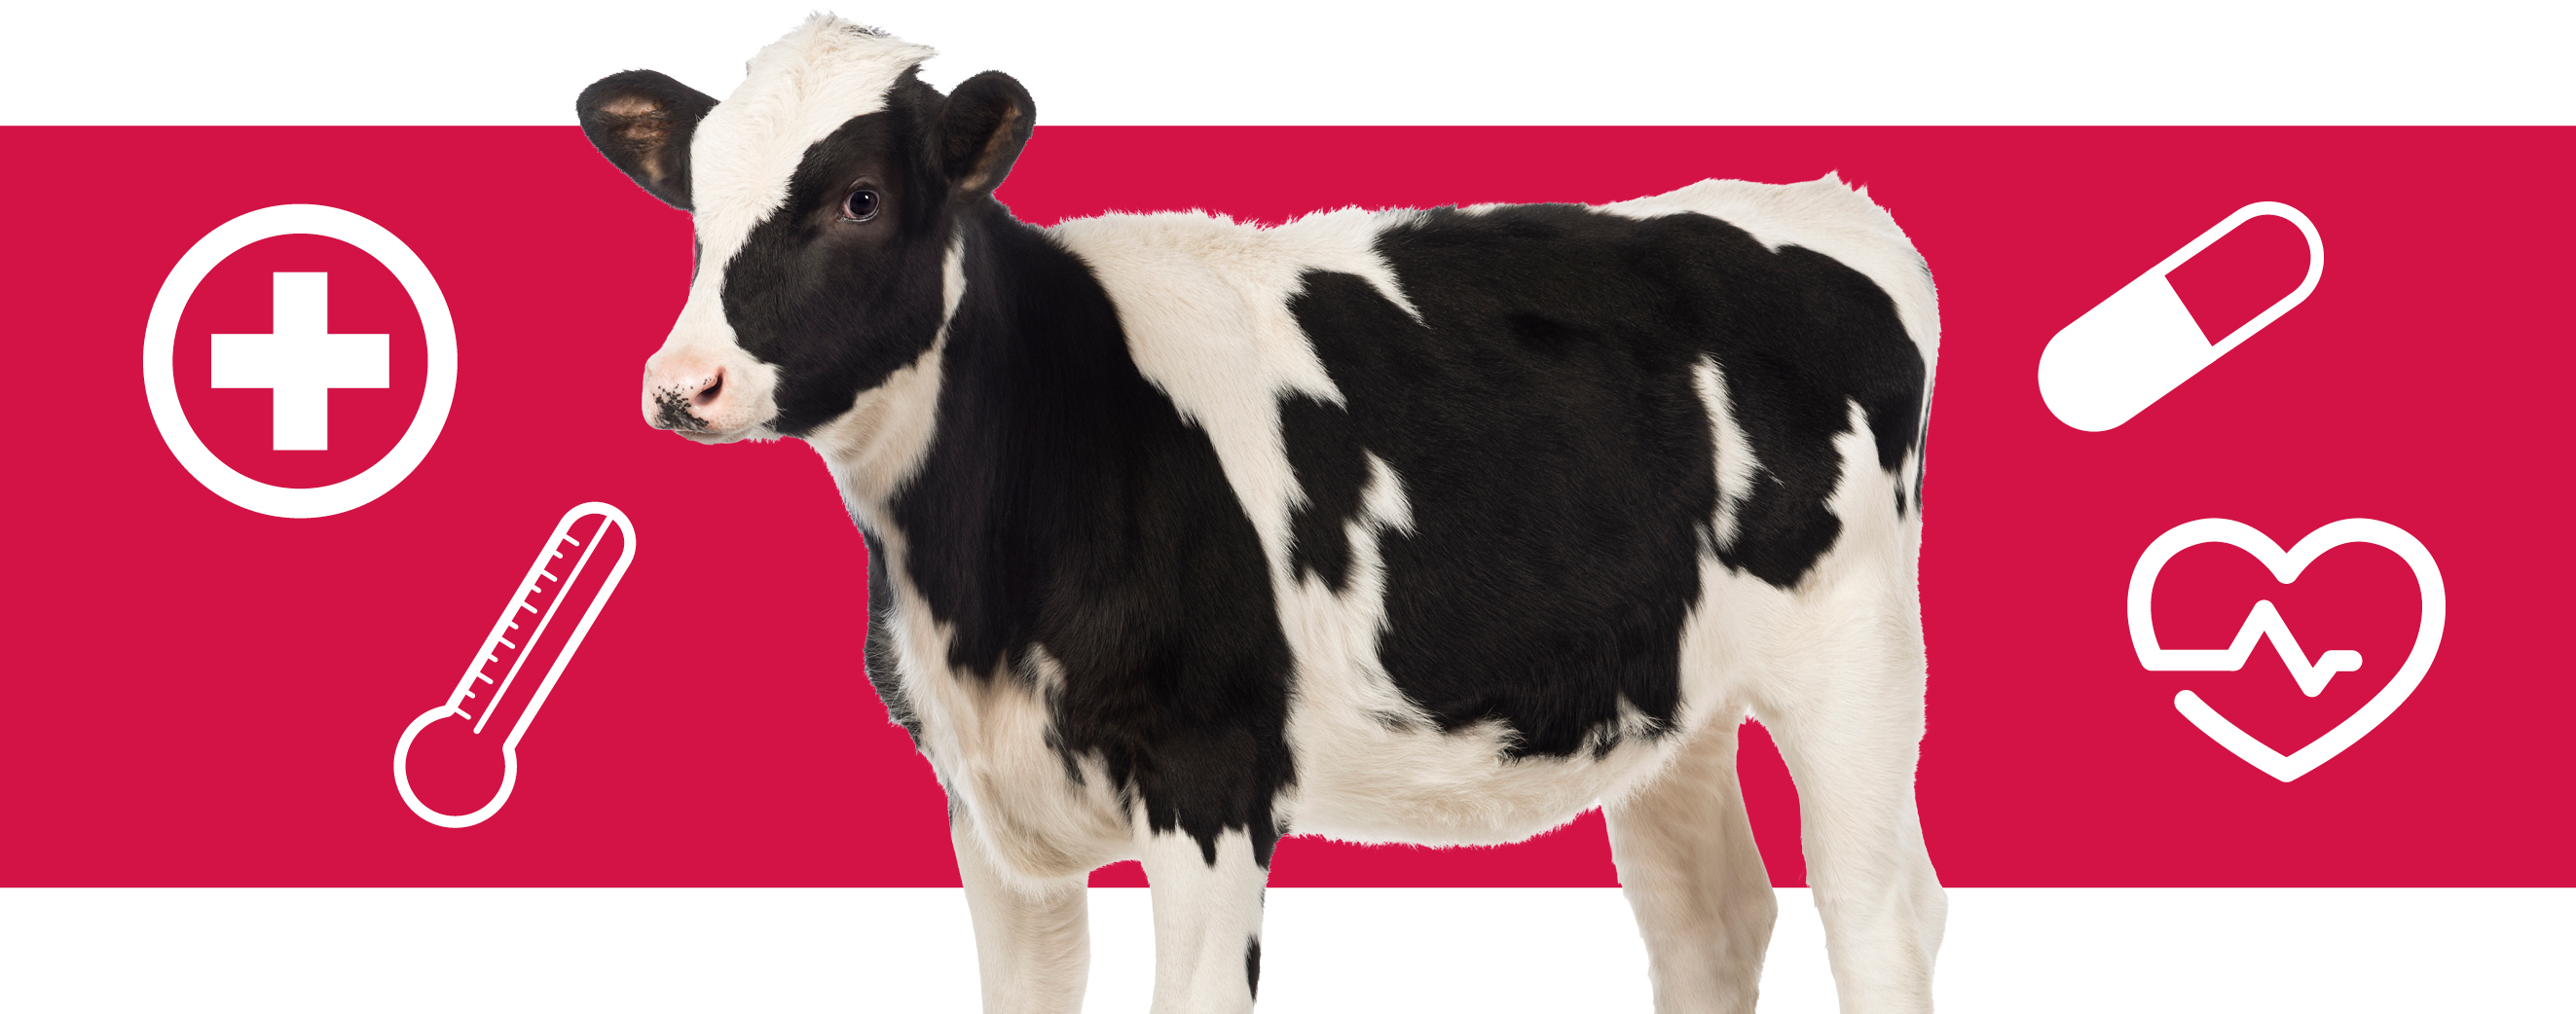 Beef Cattle Management Practices Worksheet - Worksheet List